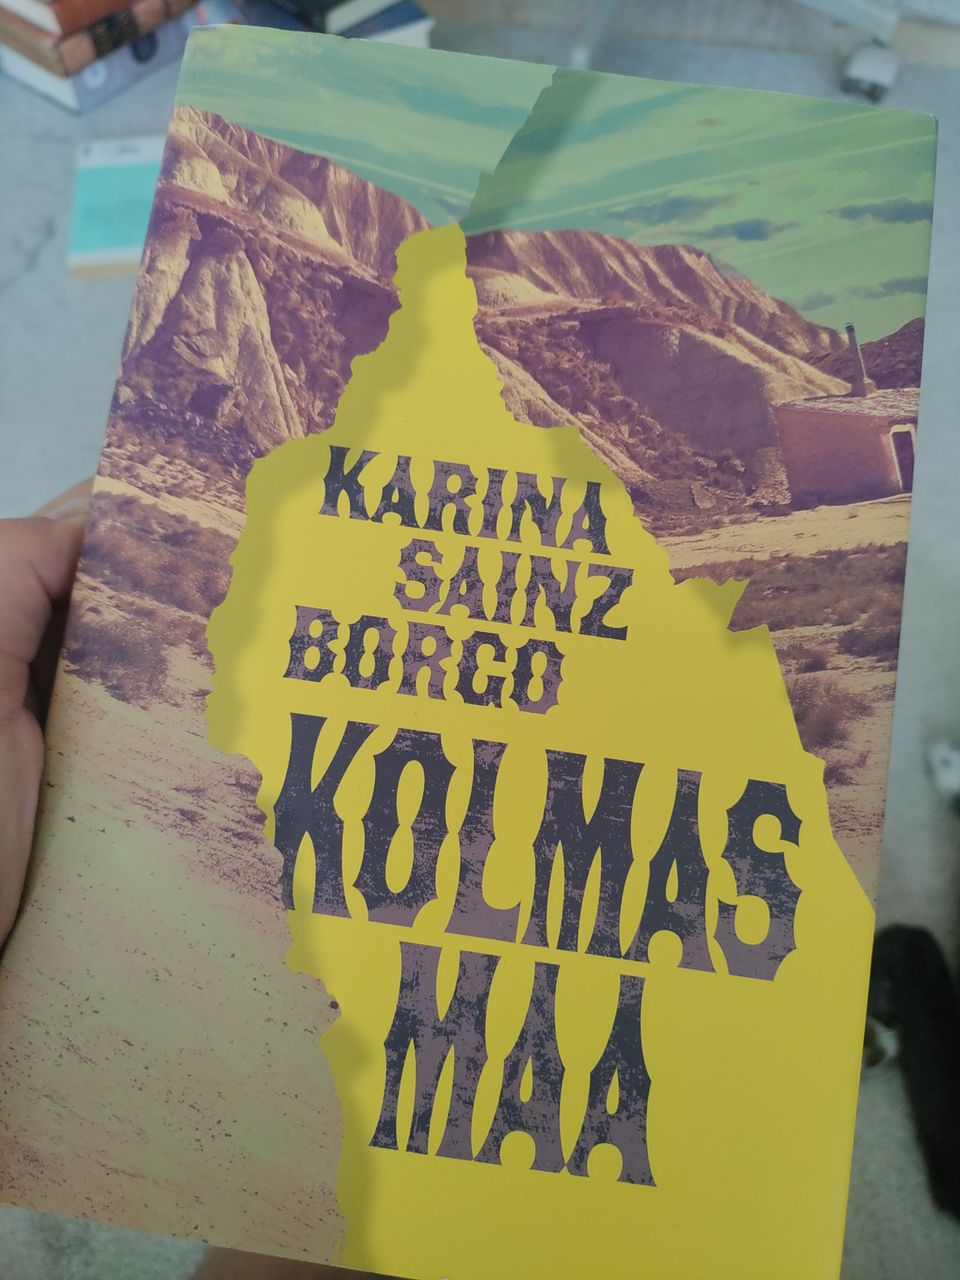 Karina Sainz Borgo : Kolmas maa